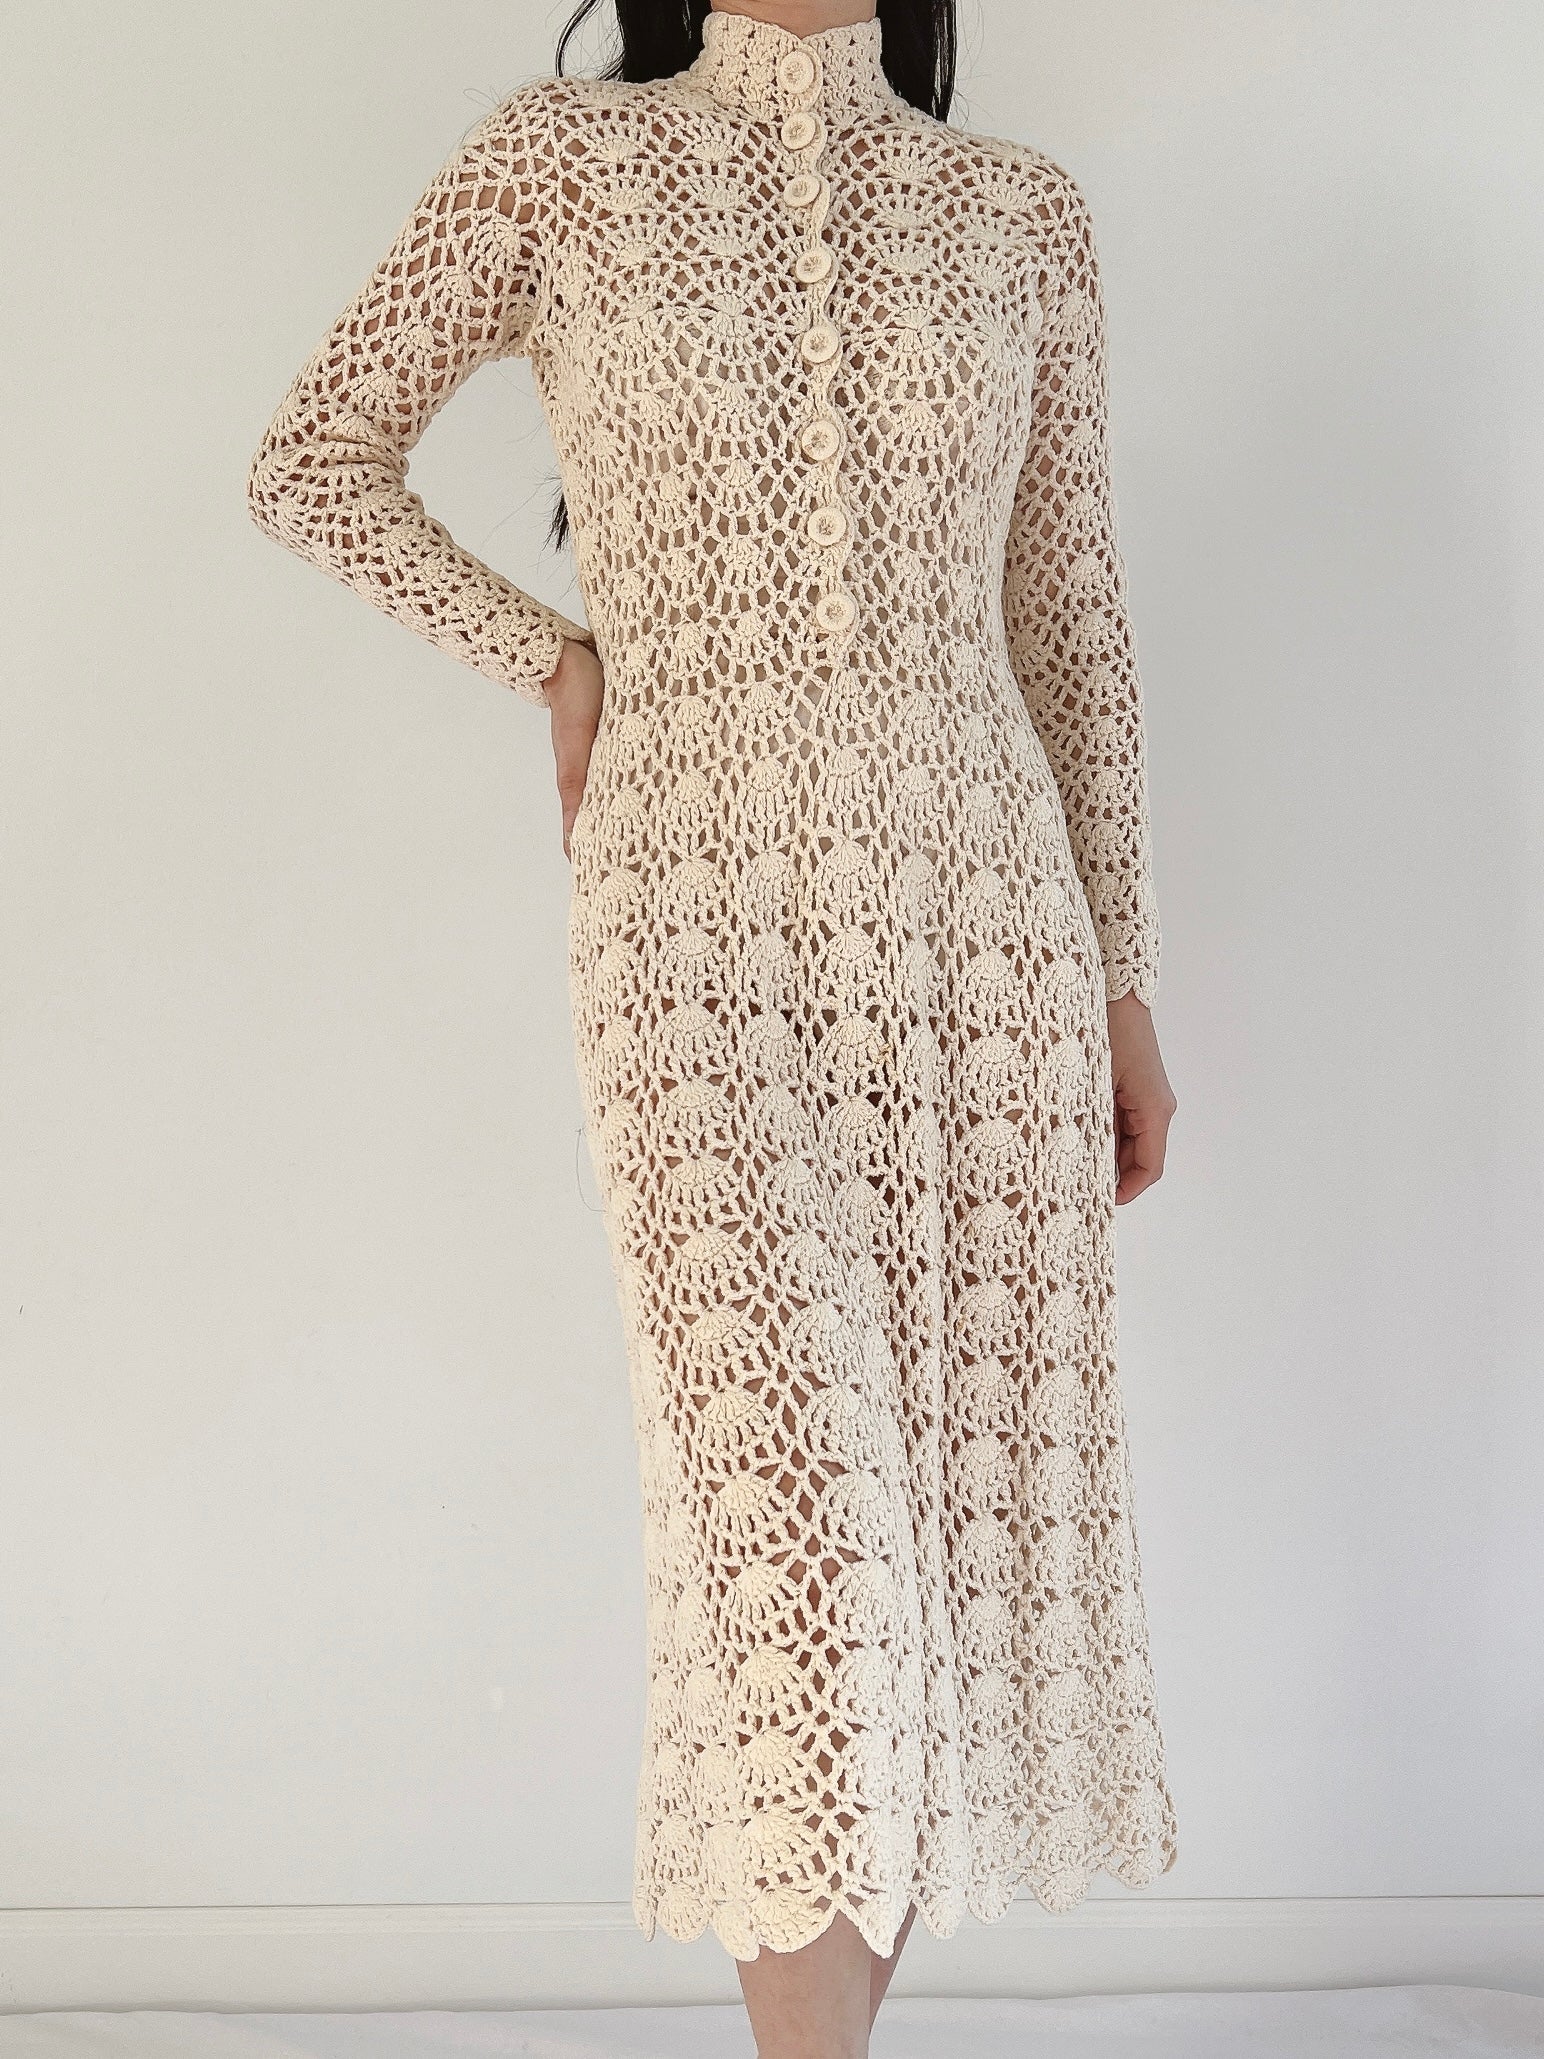 1970s Long Sleeves Crochet Dress - XS-M